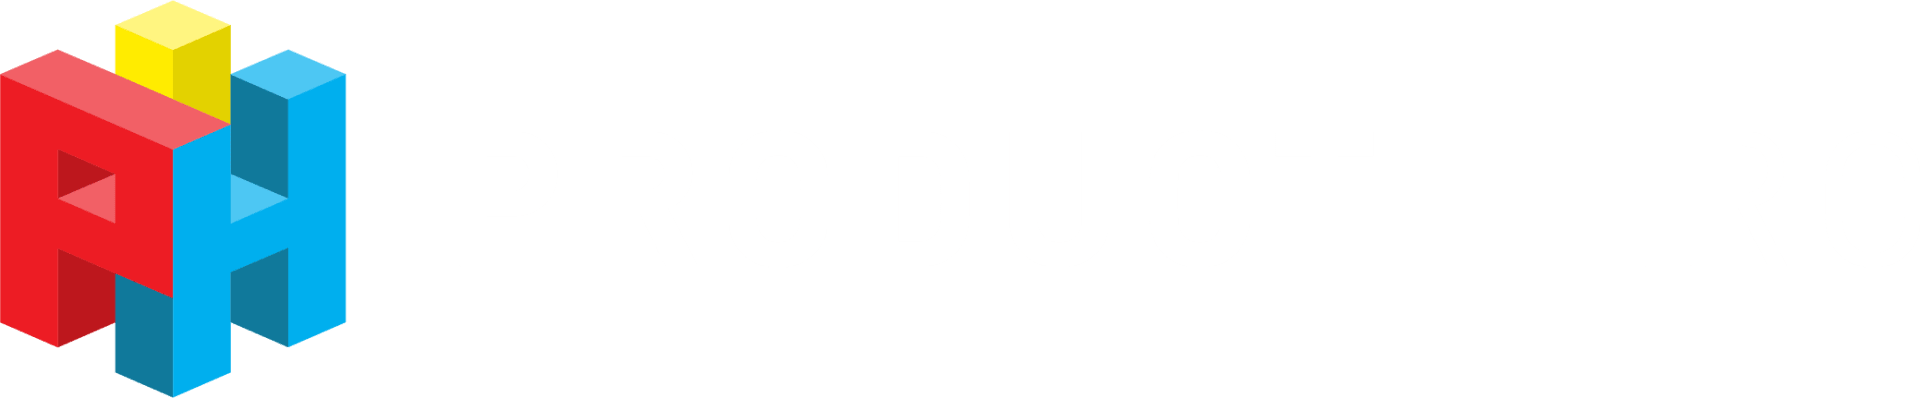 Producthero logo